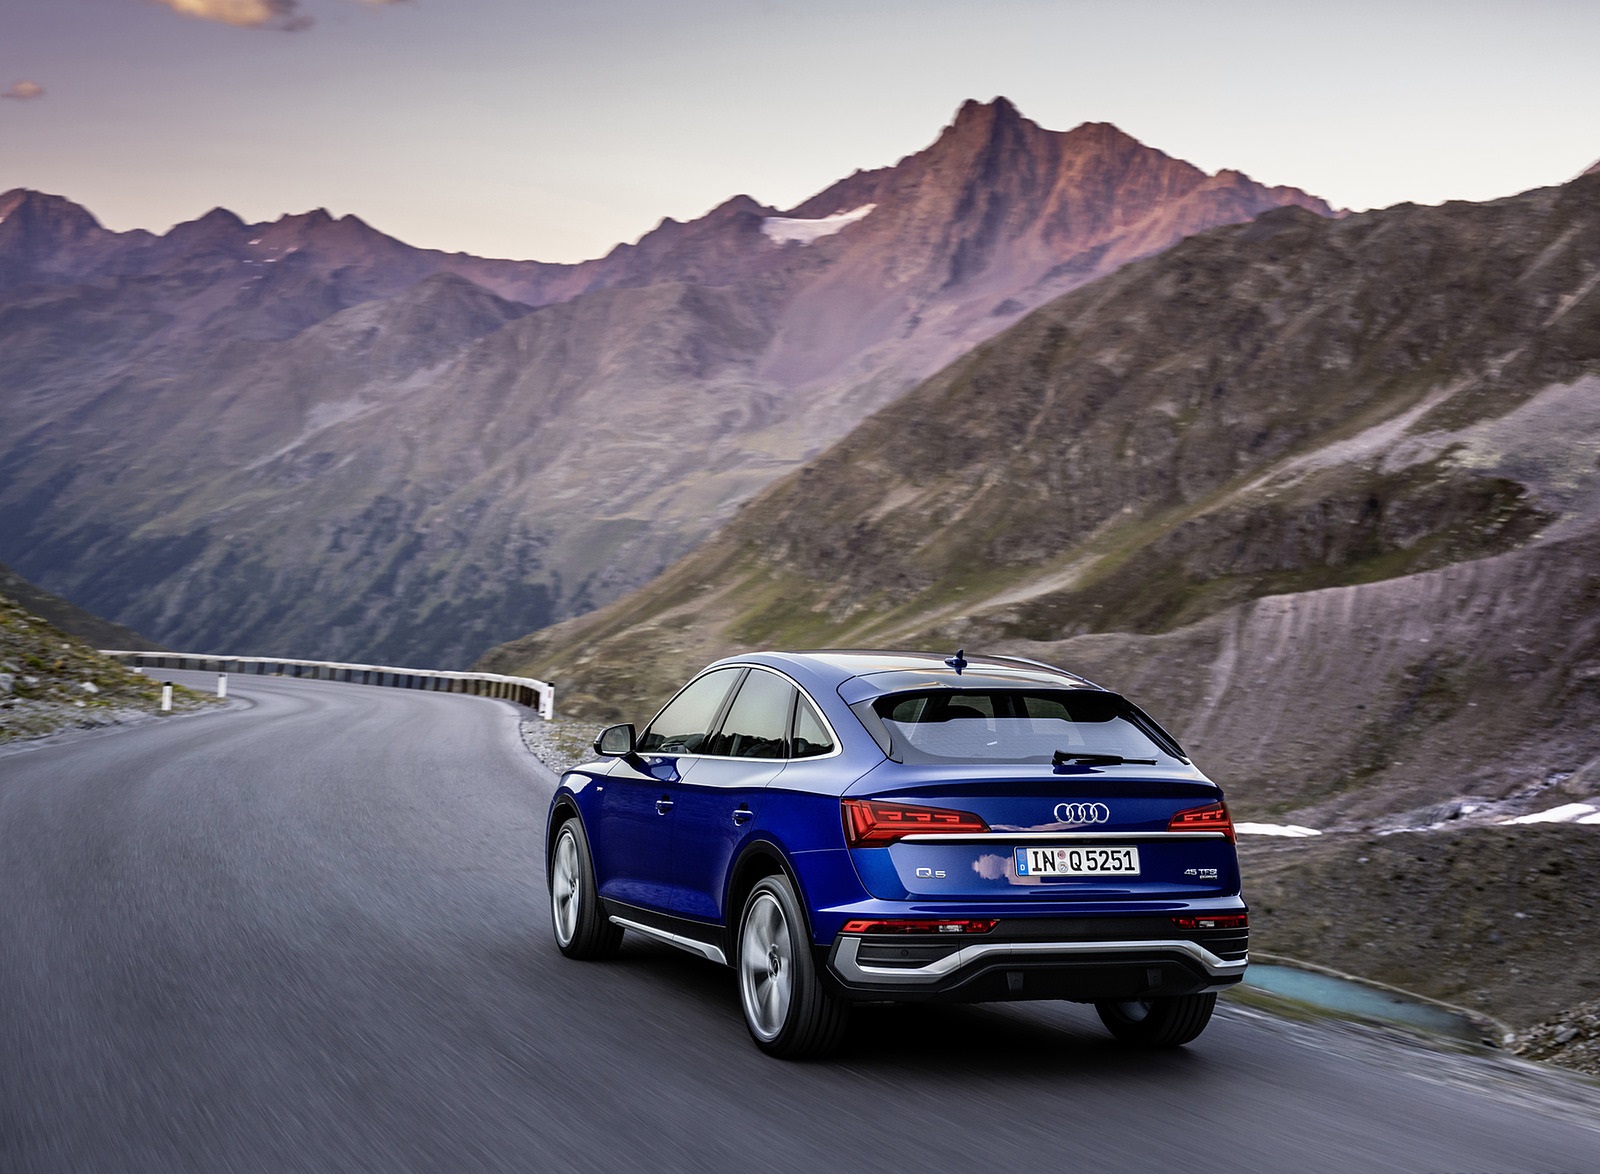 2021 Audi Q5 Sportback (Color: Ultra Blue) Rear Three-Quarter Wallpapers  #62 of 158